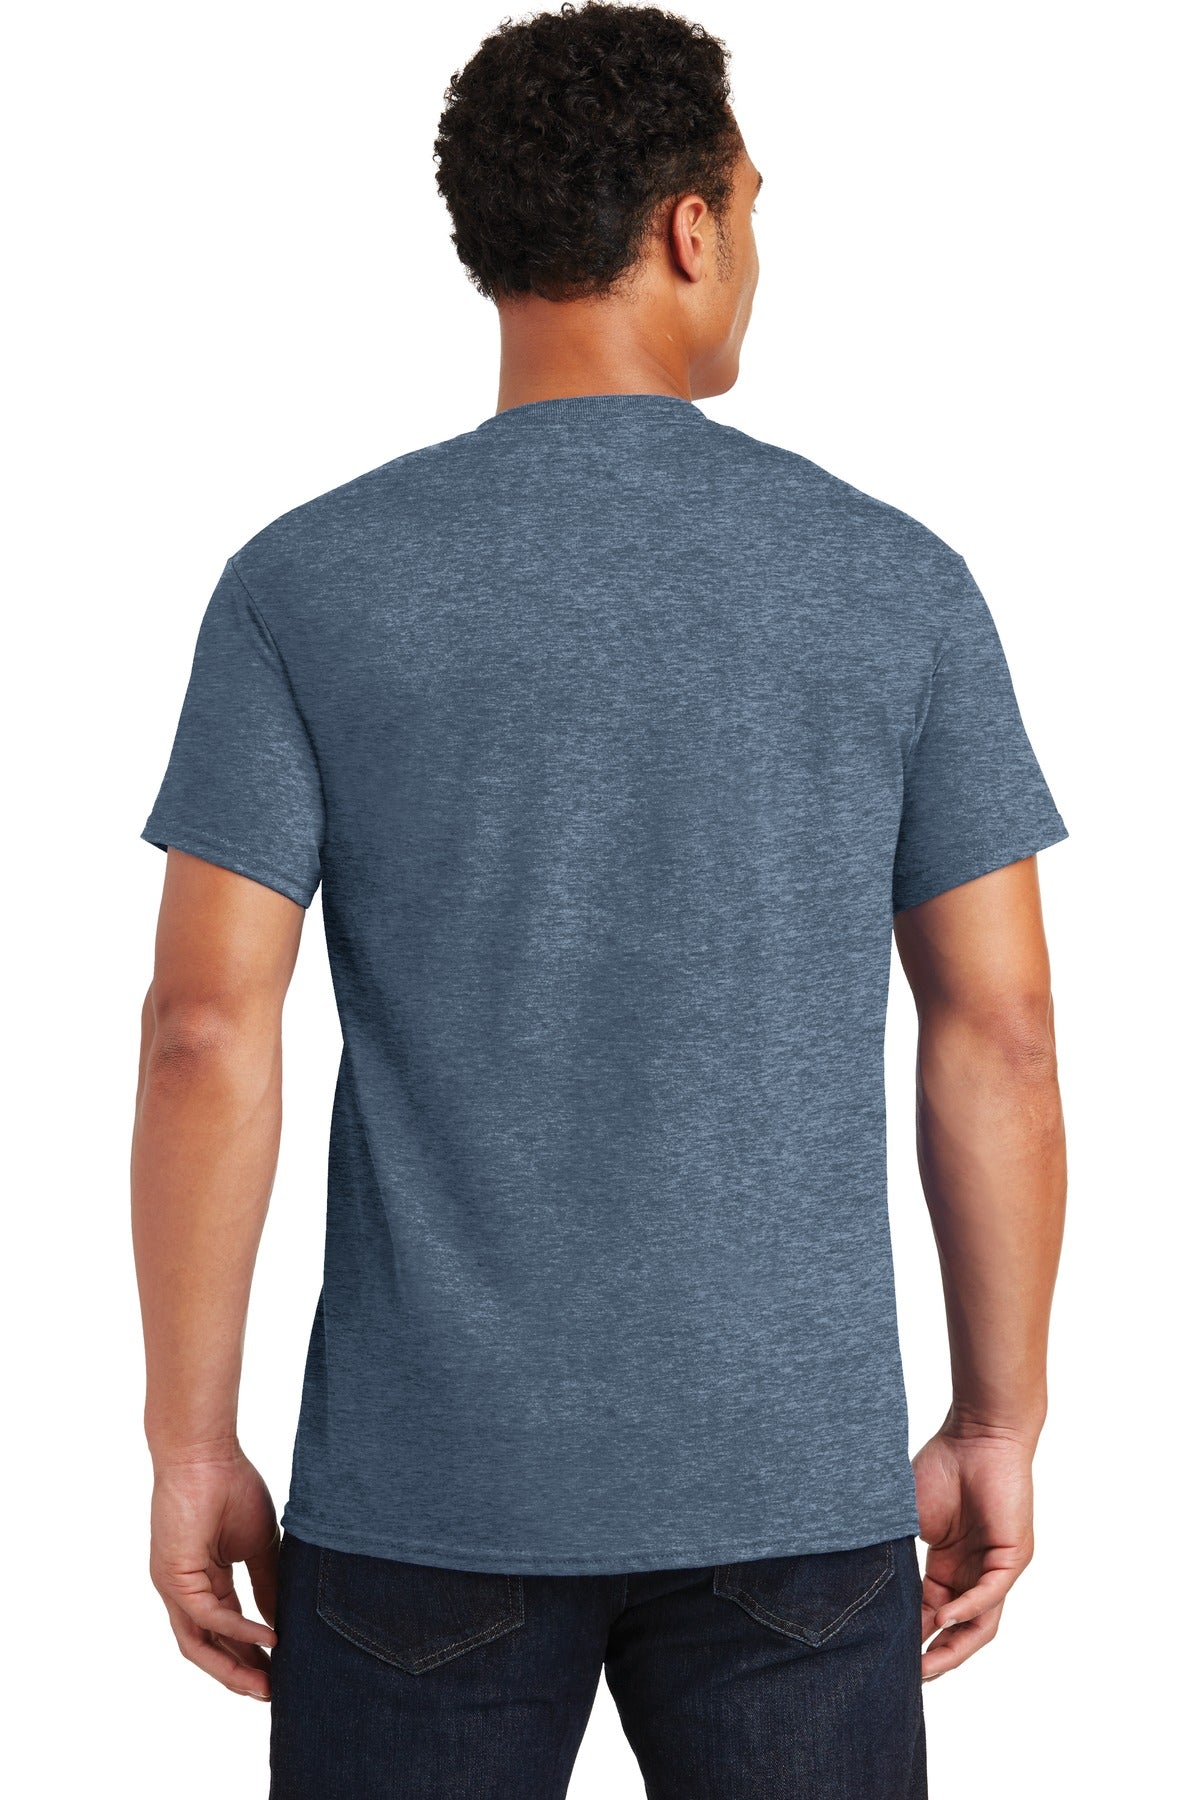 Gildan - Ultra Cotton 100% US Cotton T-Shirt. 2000 - Heathered Indigo